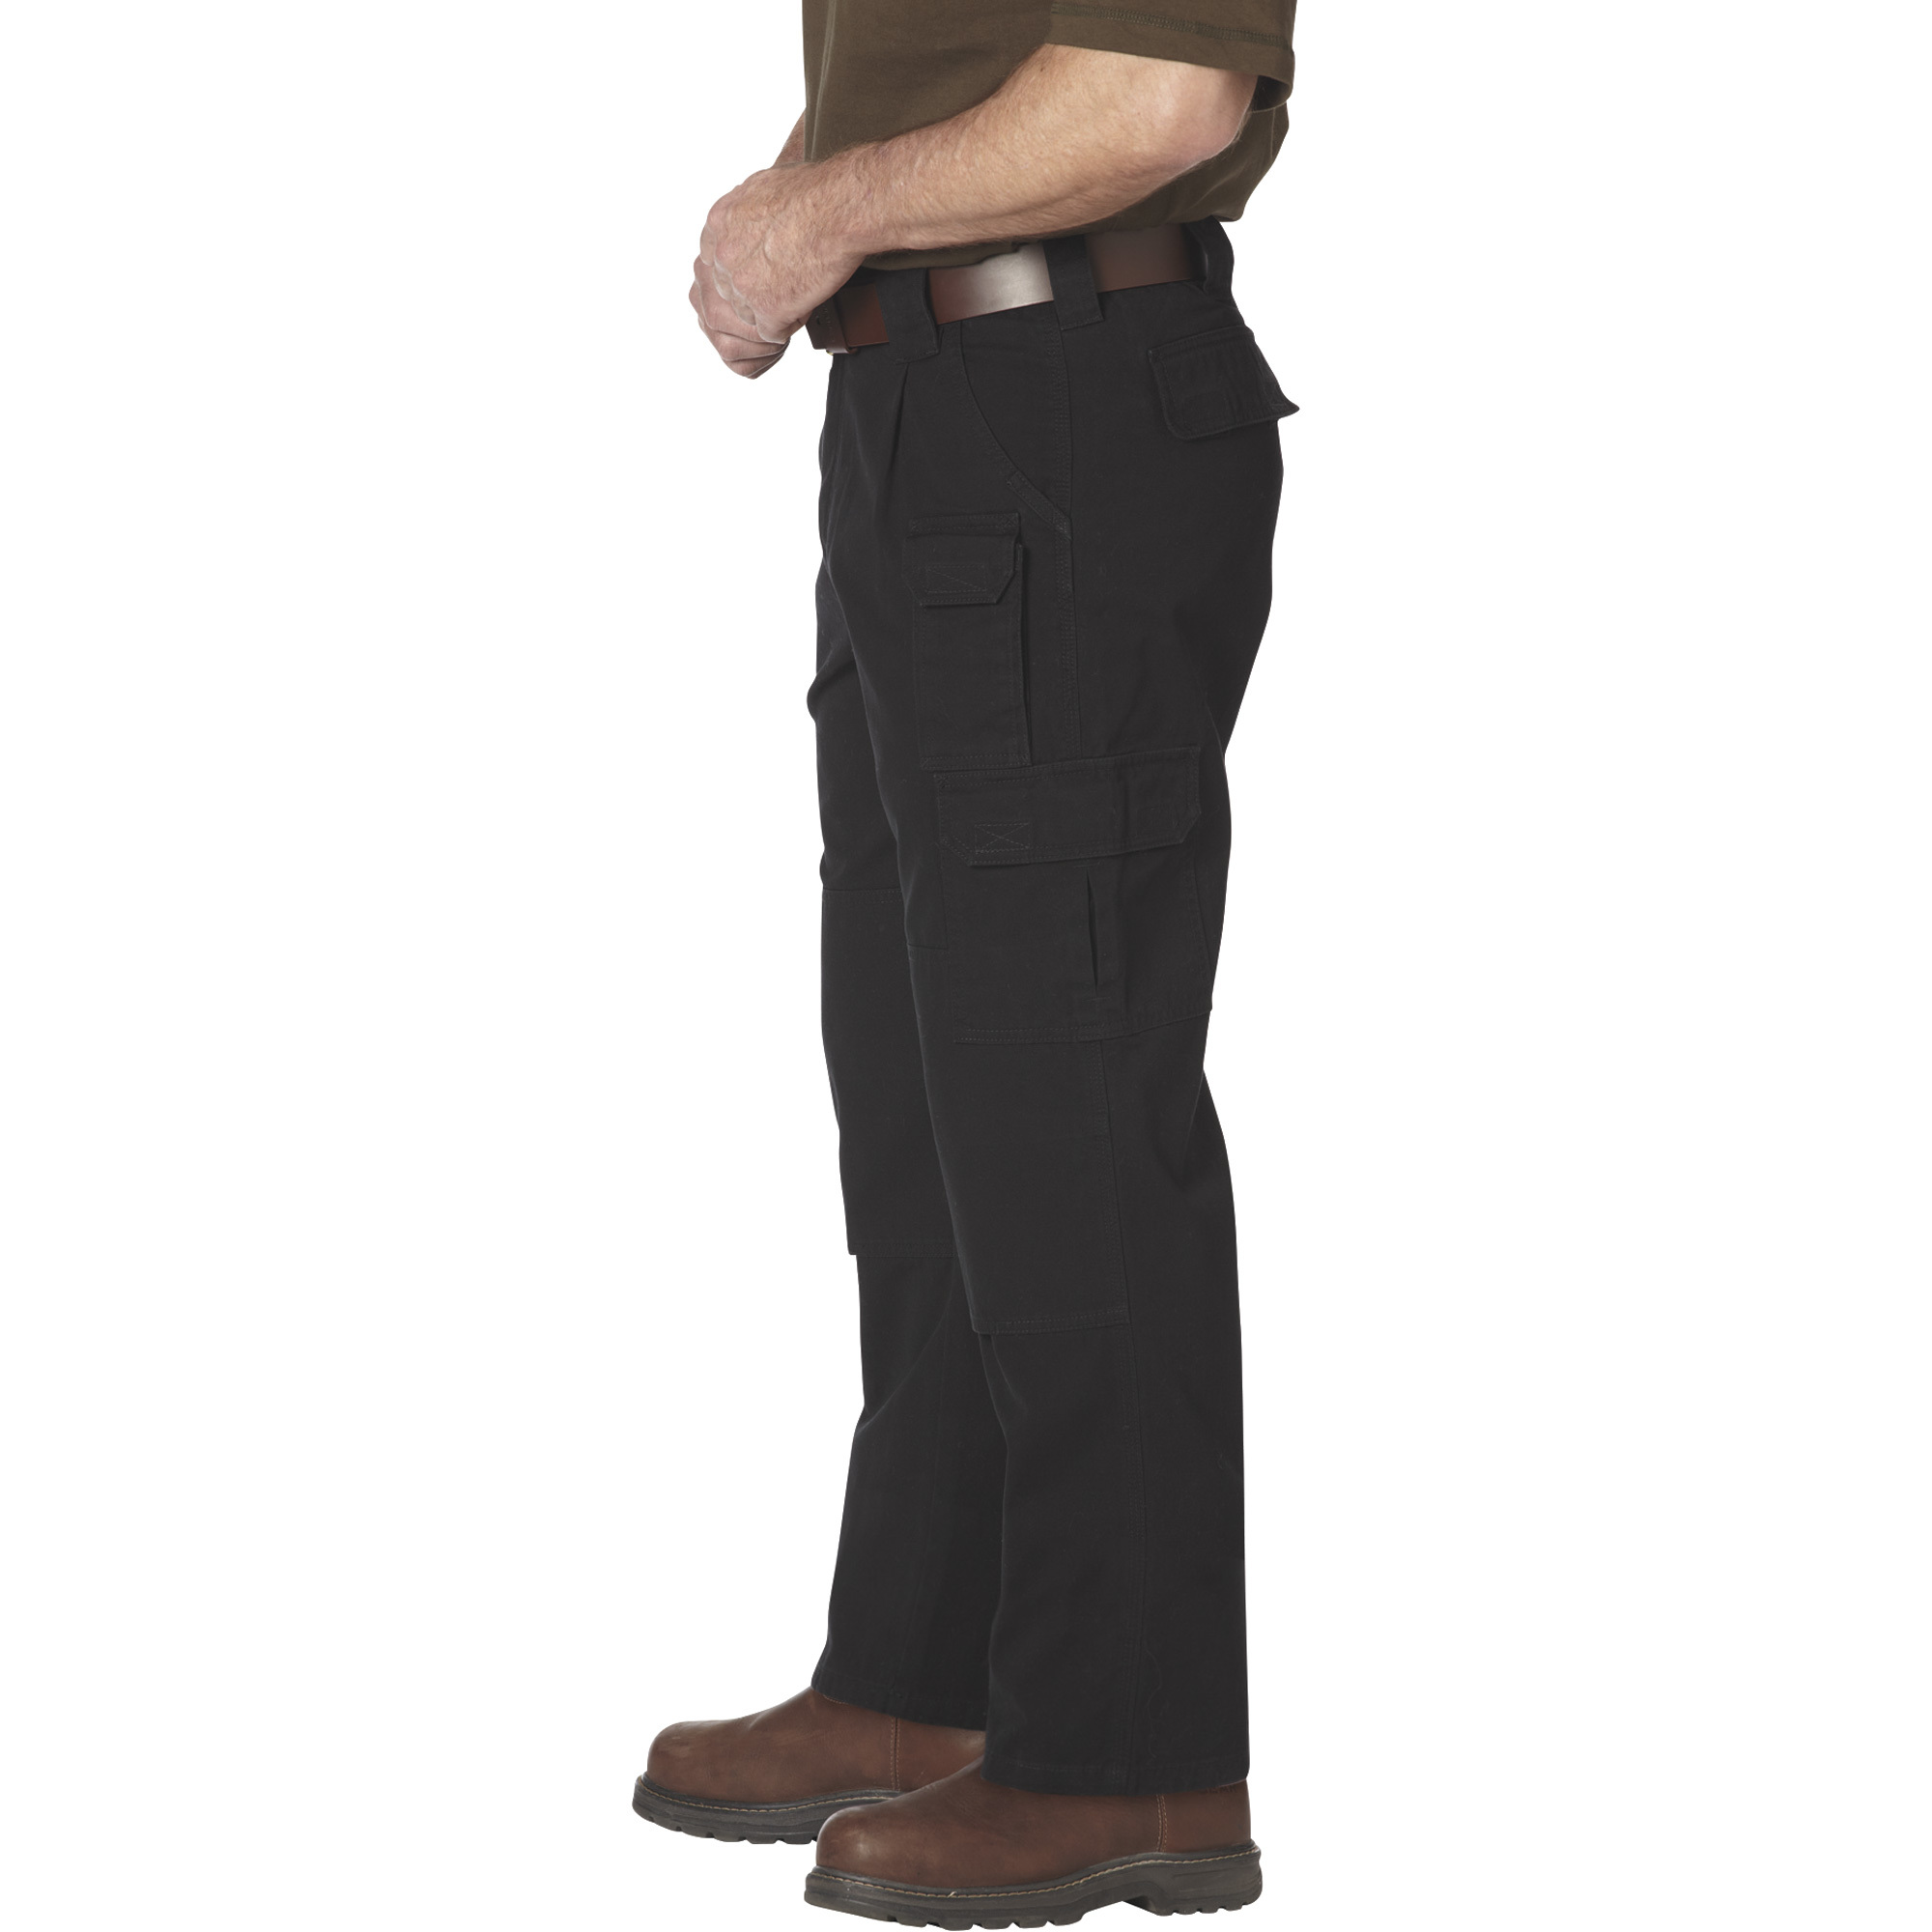 Gravel Gear Men's 7-Pocket Tactical Pants with Teflon - Black, 36Inch Waist x 34Inch Inseam